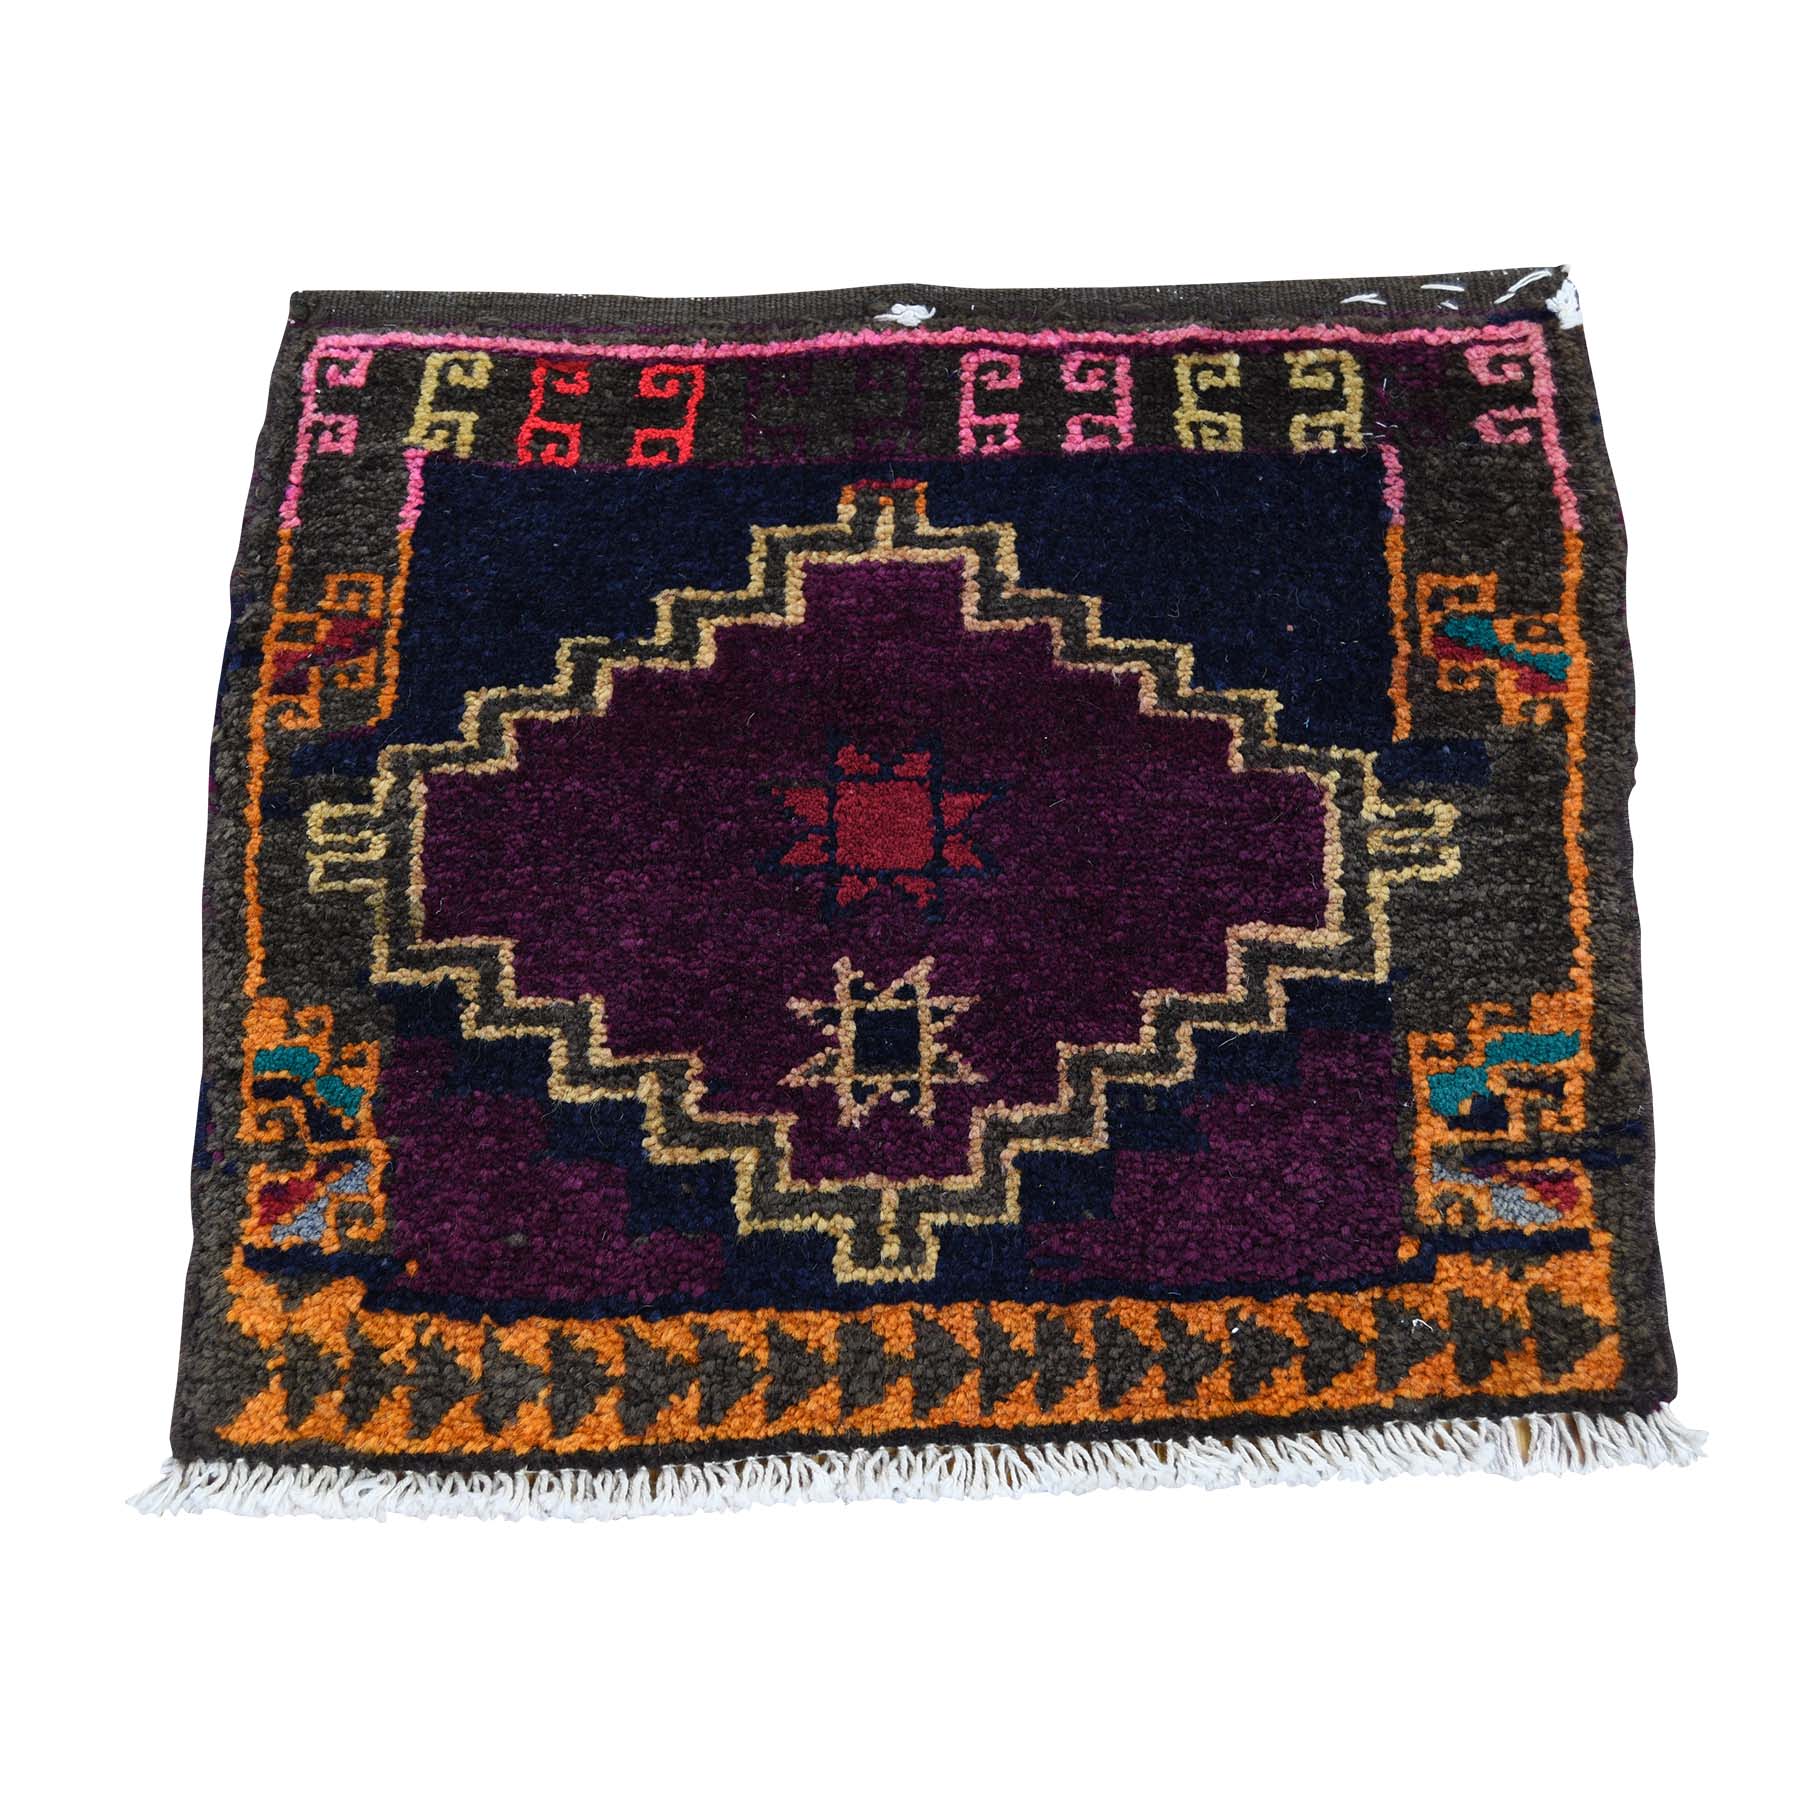 1'8"x1'8" Square Persian Shiraz Bag Face Pure Wool Hand Woven Oriental Rug 